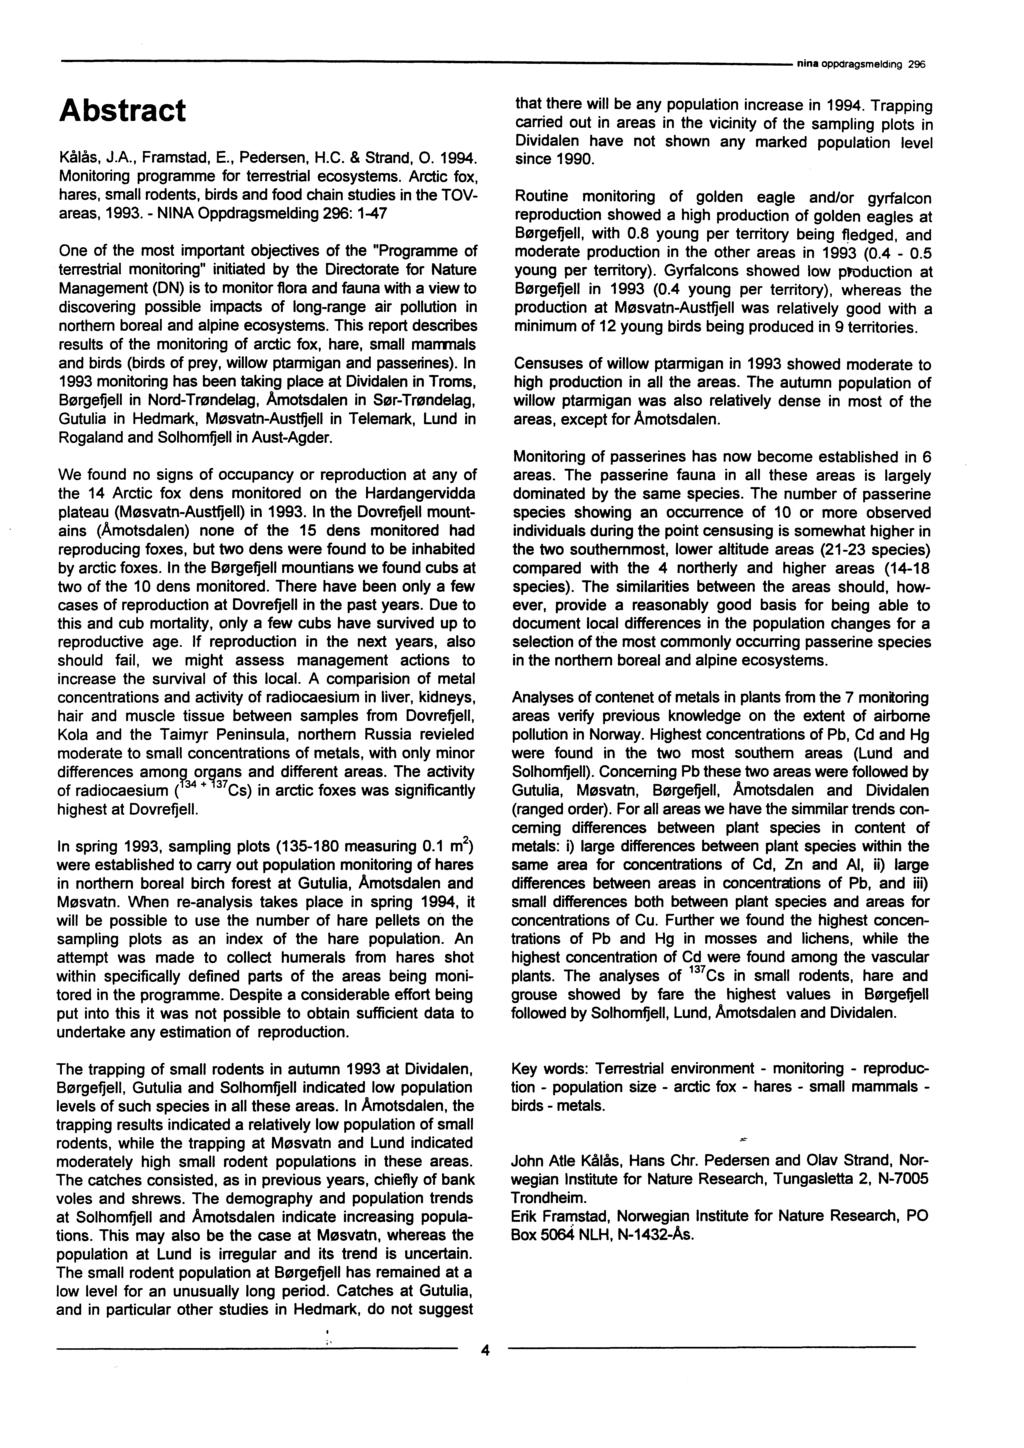 nina oppdragsmelding 296 Abstract Kålås, J.A., Framstad, E., Pedersen, H.C. & Strand, 0. 1994. Monitoring programme for terrestrial ecosystems.